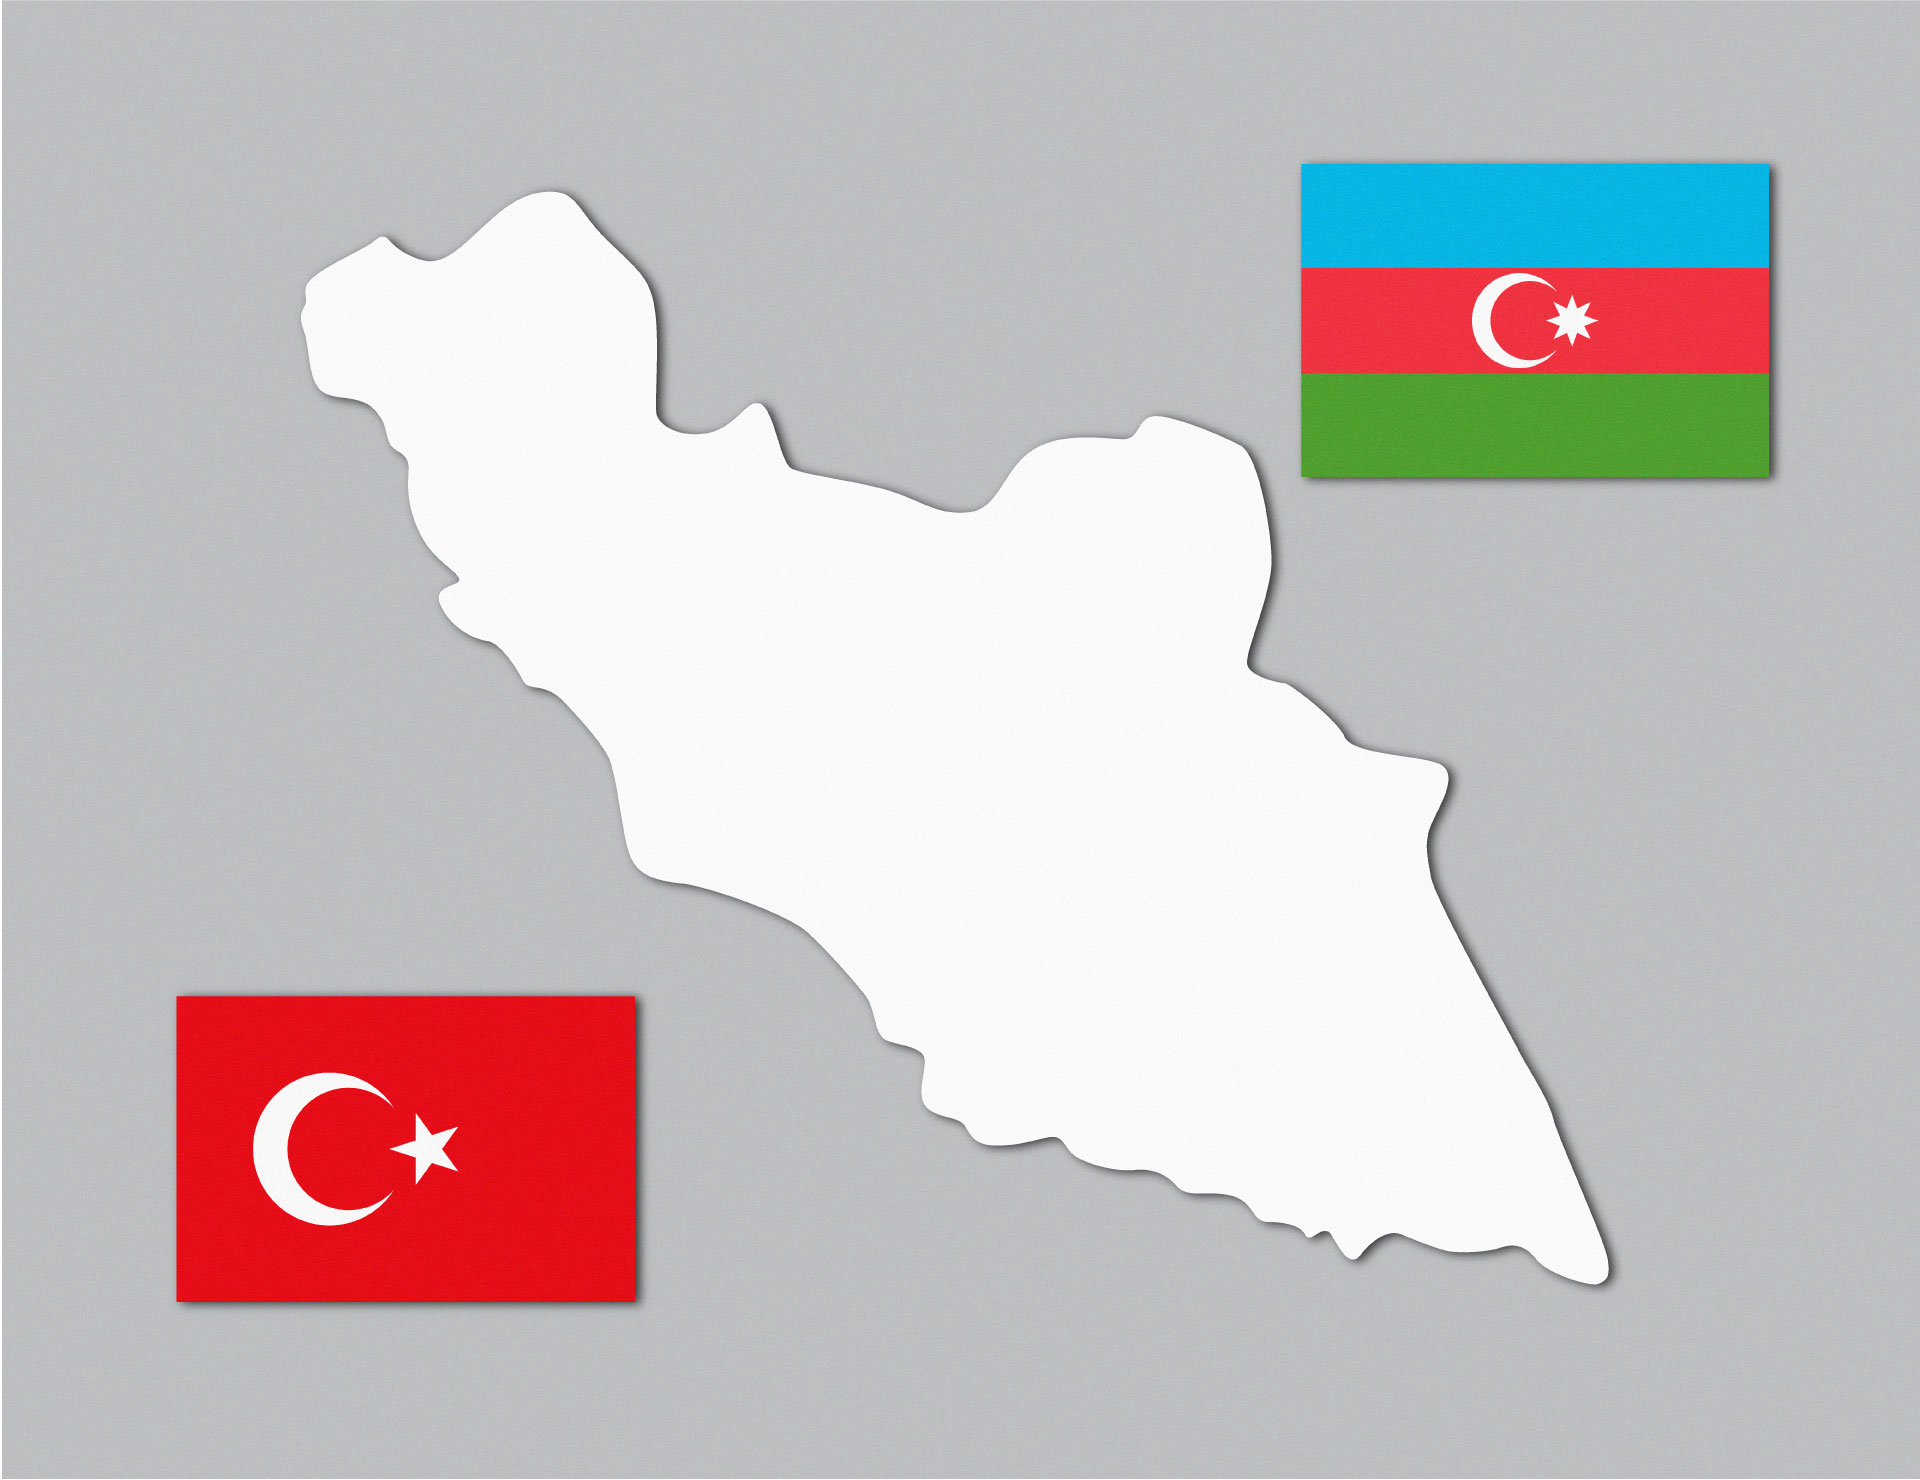 Nakhchivan model for Nagorno-Karabakh? No process possible without Turkey!